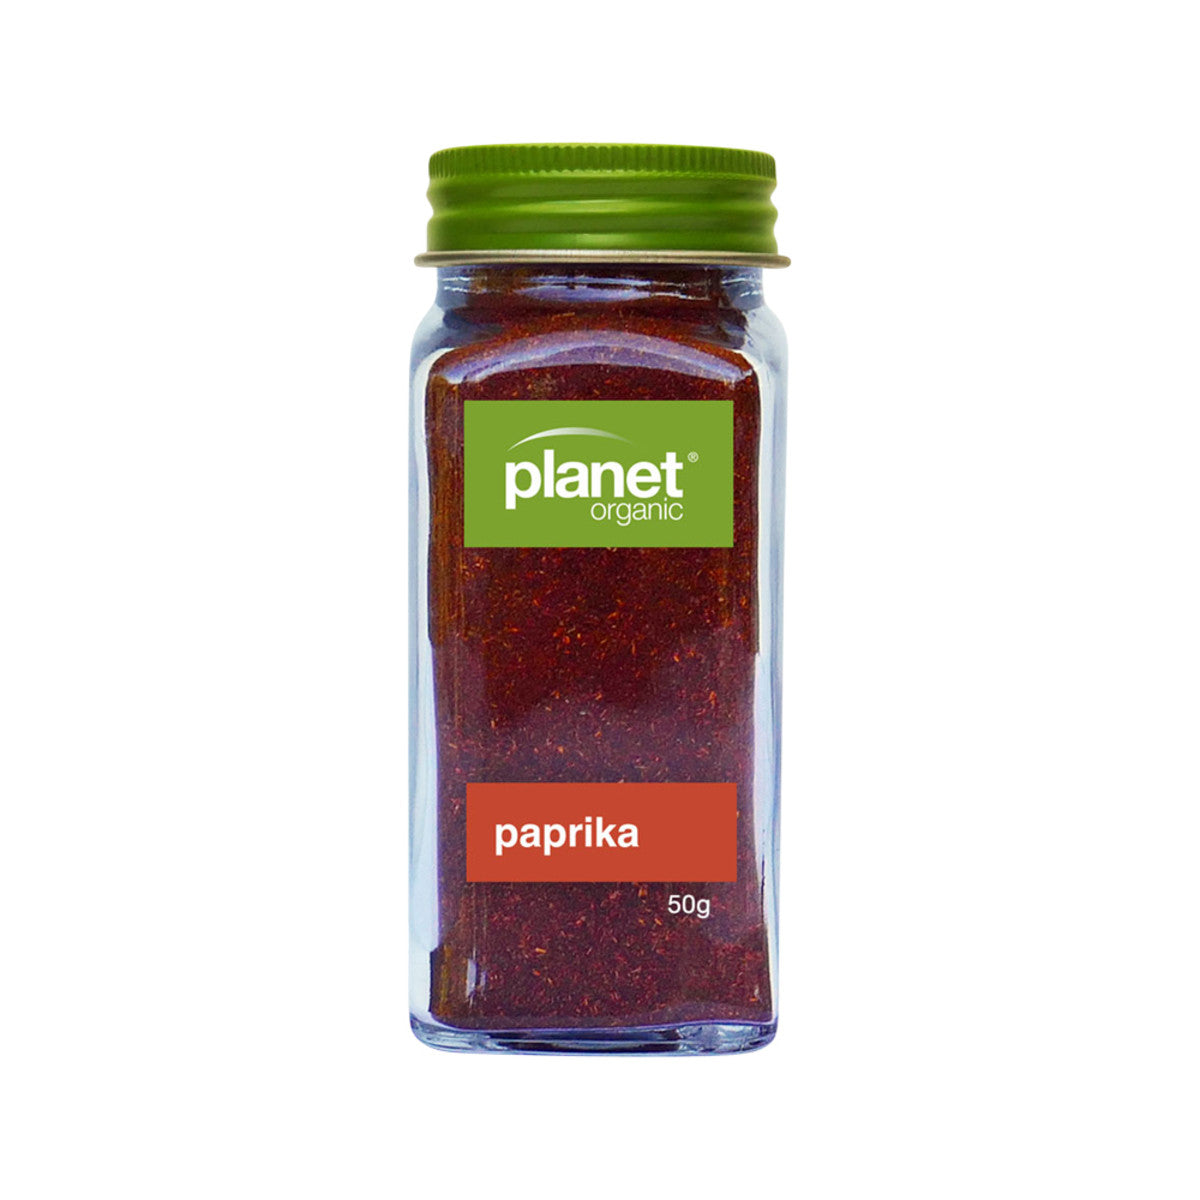 Planet Organic Paprika Shaker 50g